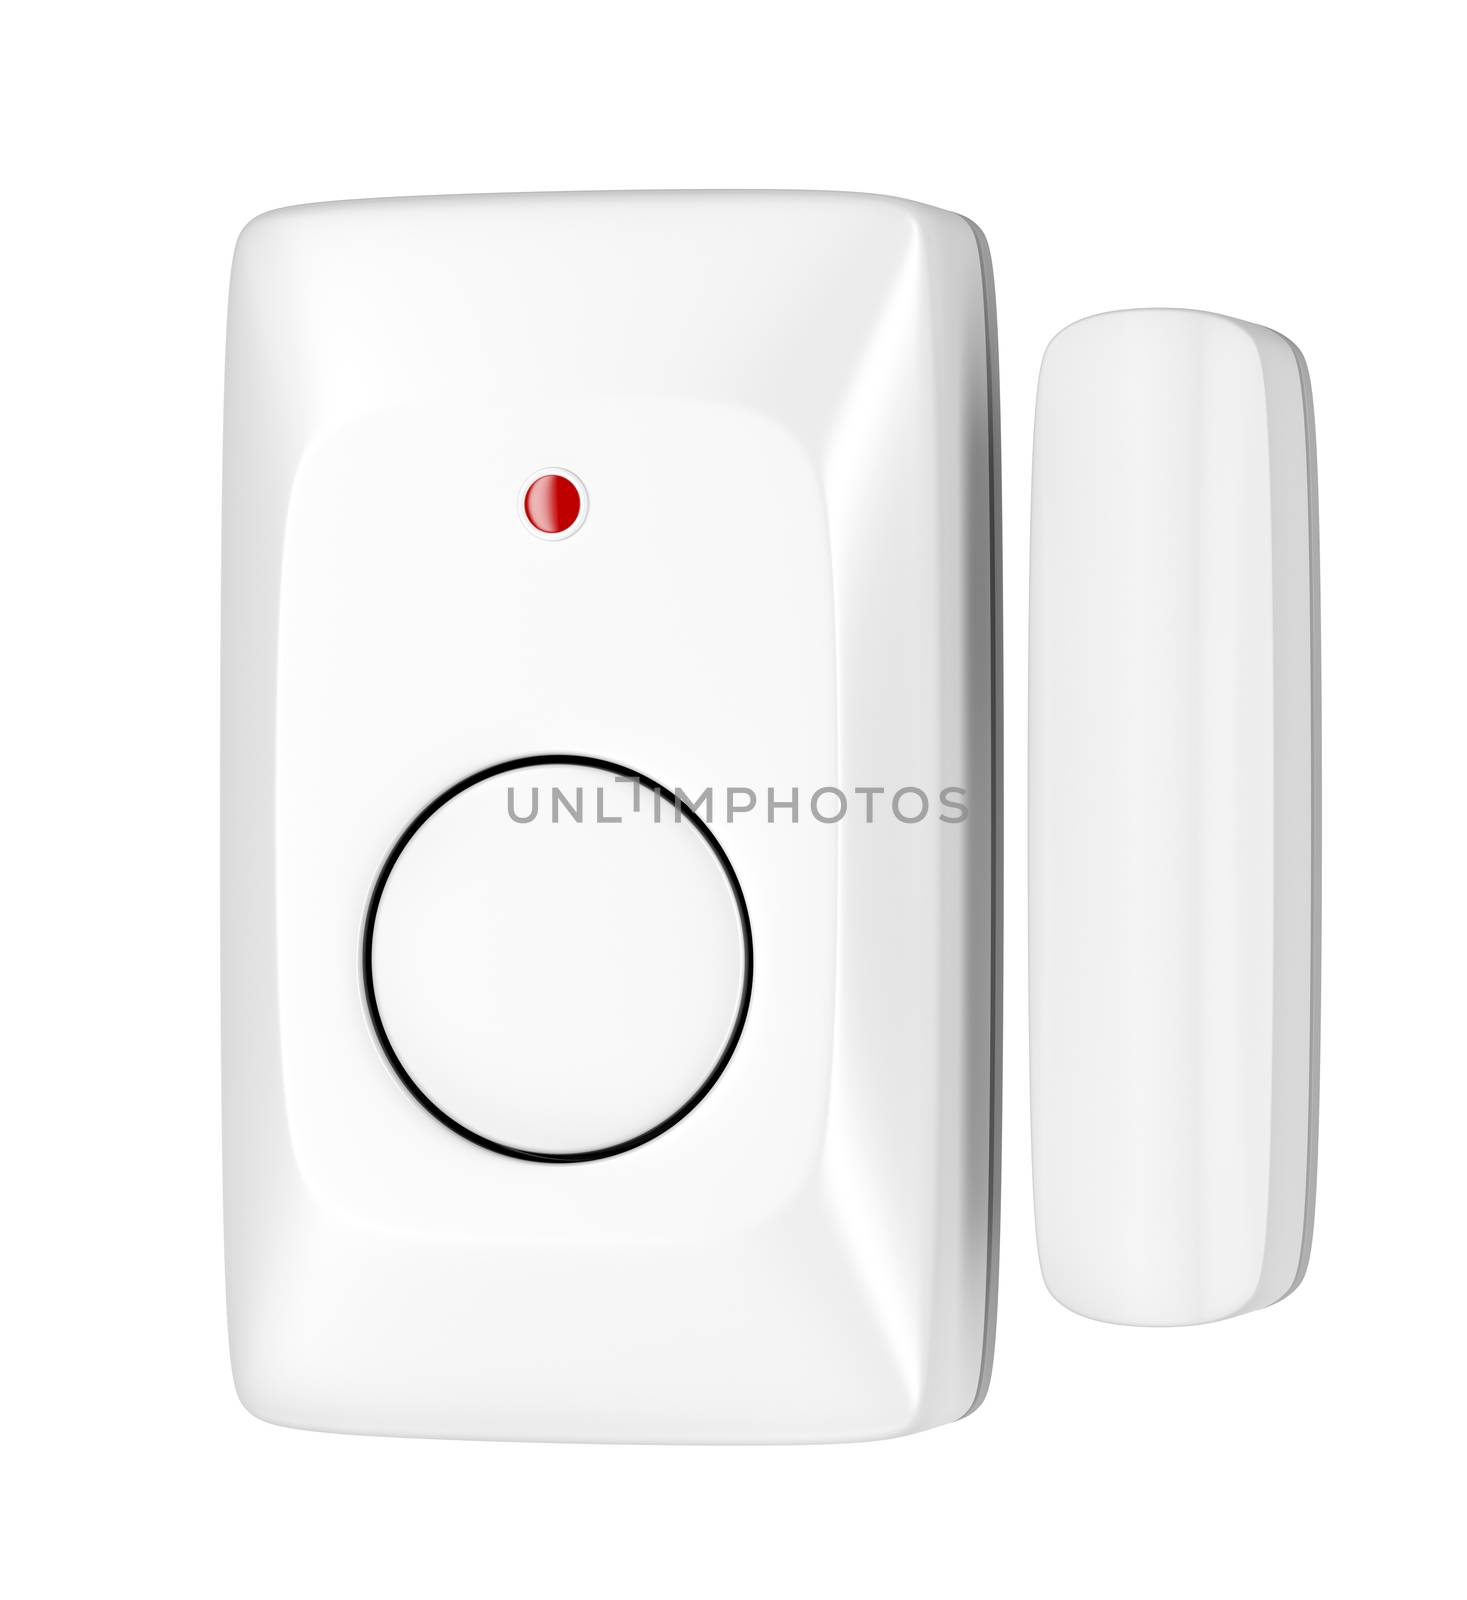 Alarm sensor for window and door by magraphics